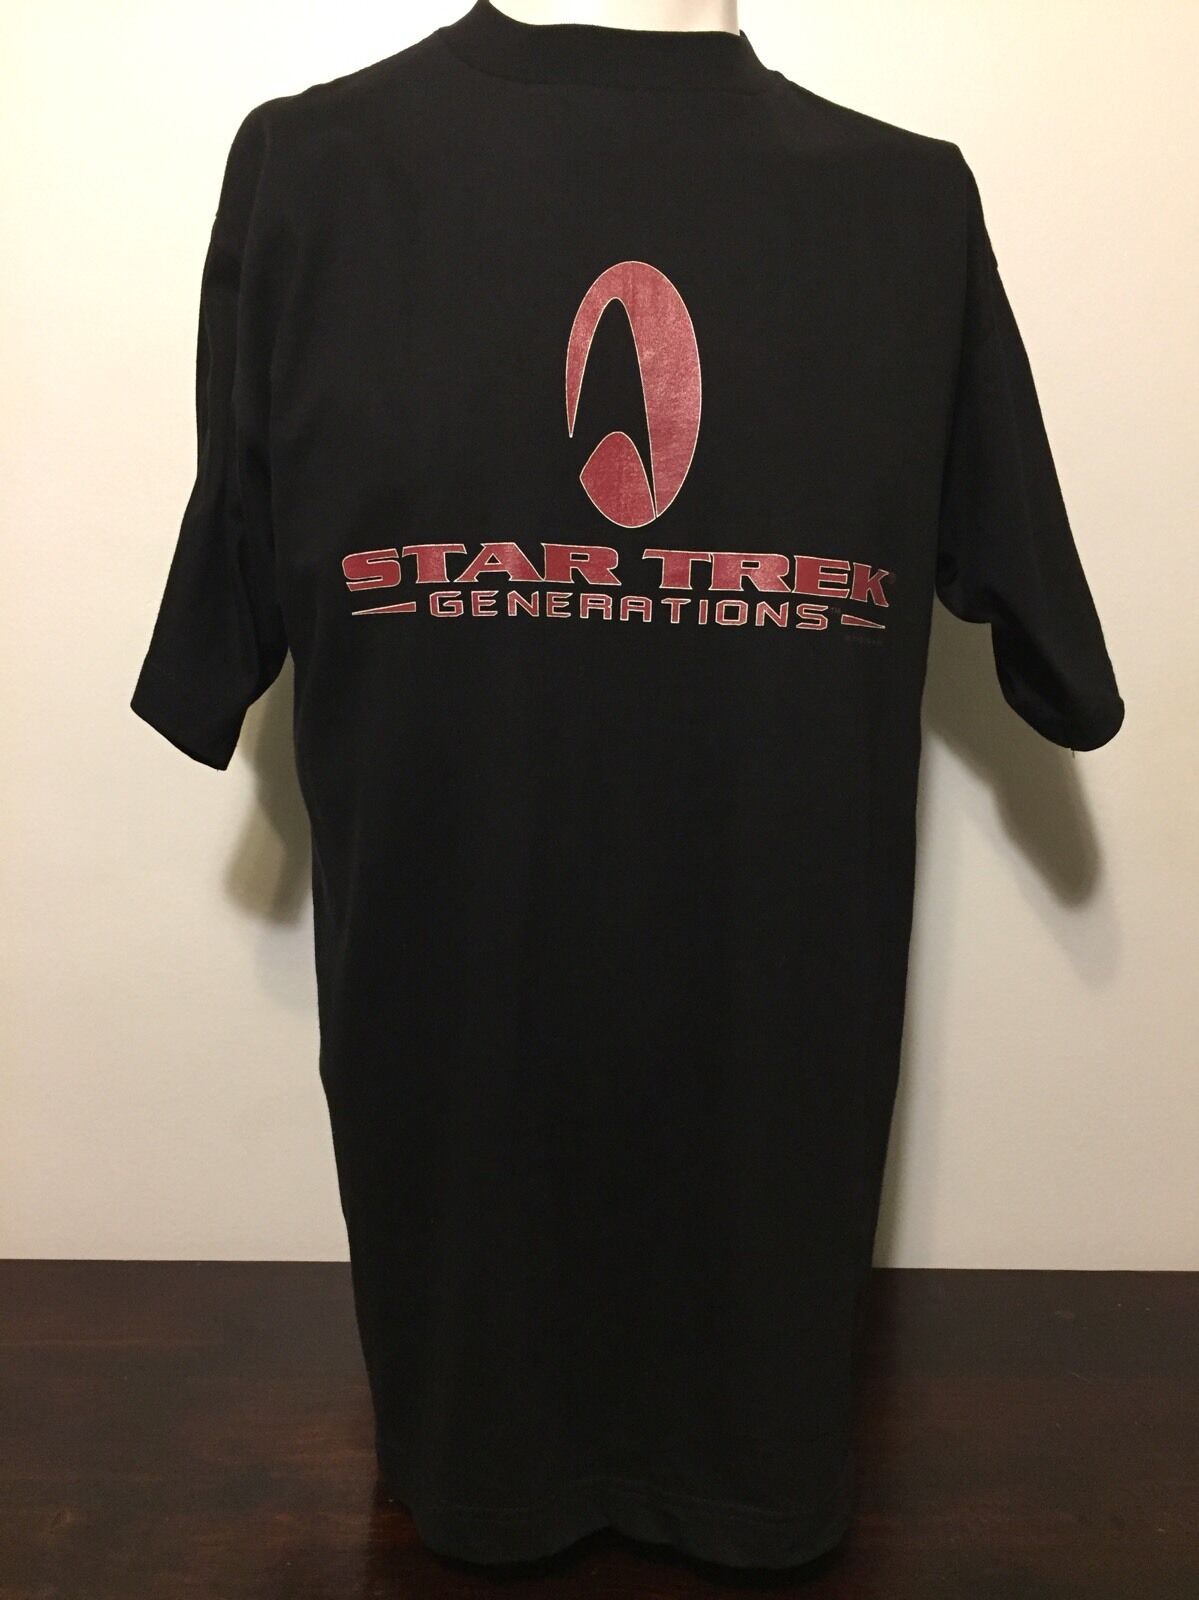 Vintage 1990s New Star Trek Generations Promo Black T-Shirt Large Never Worn NOS